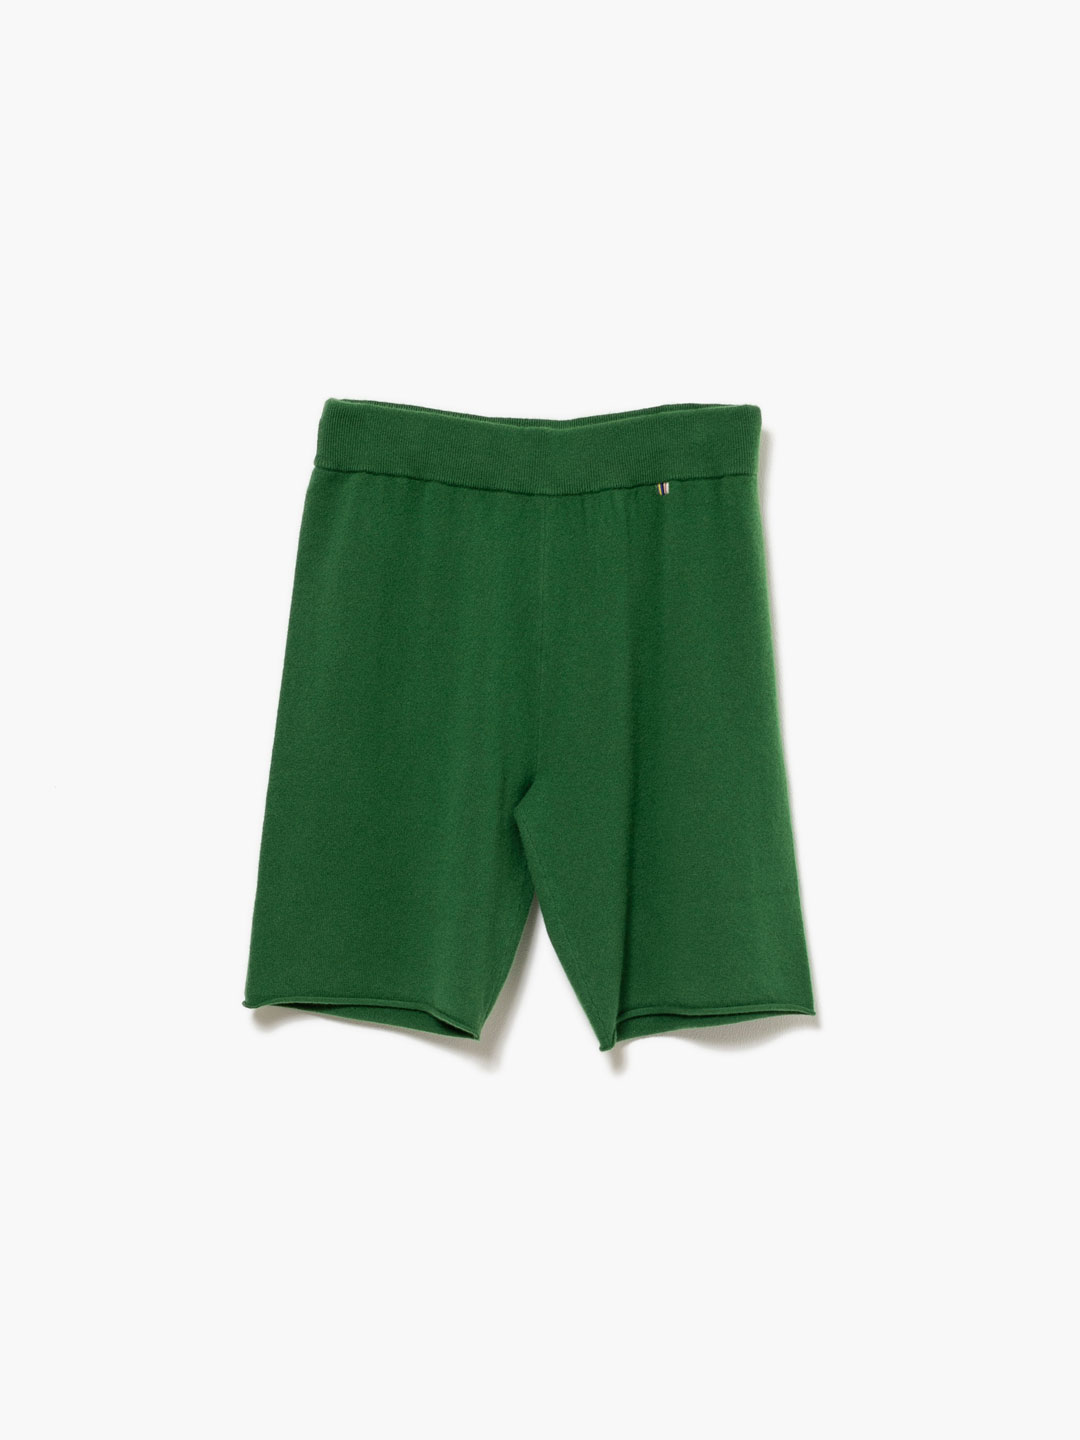 Laufen Shorts - Green